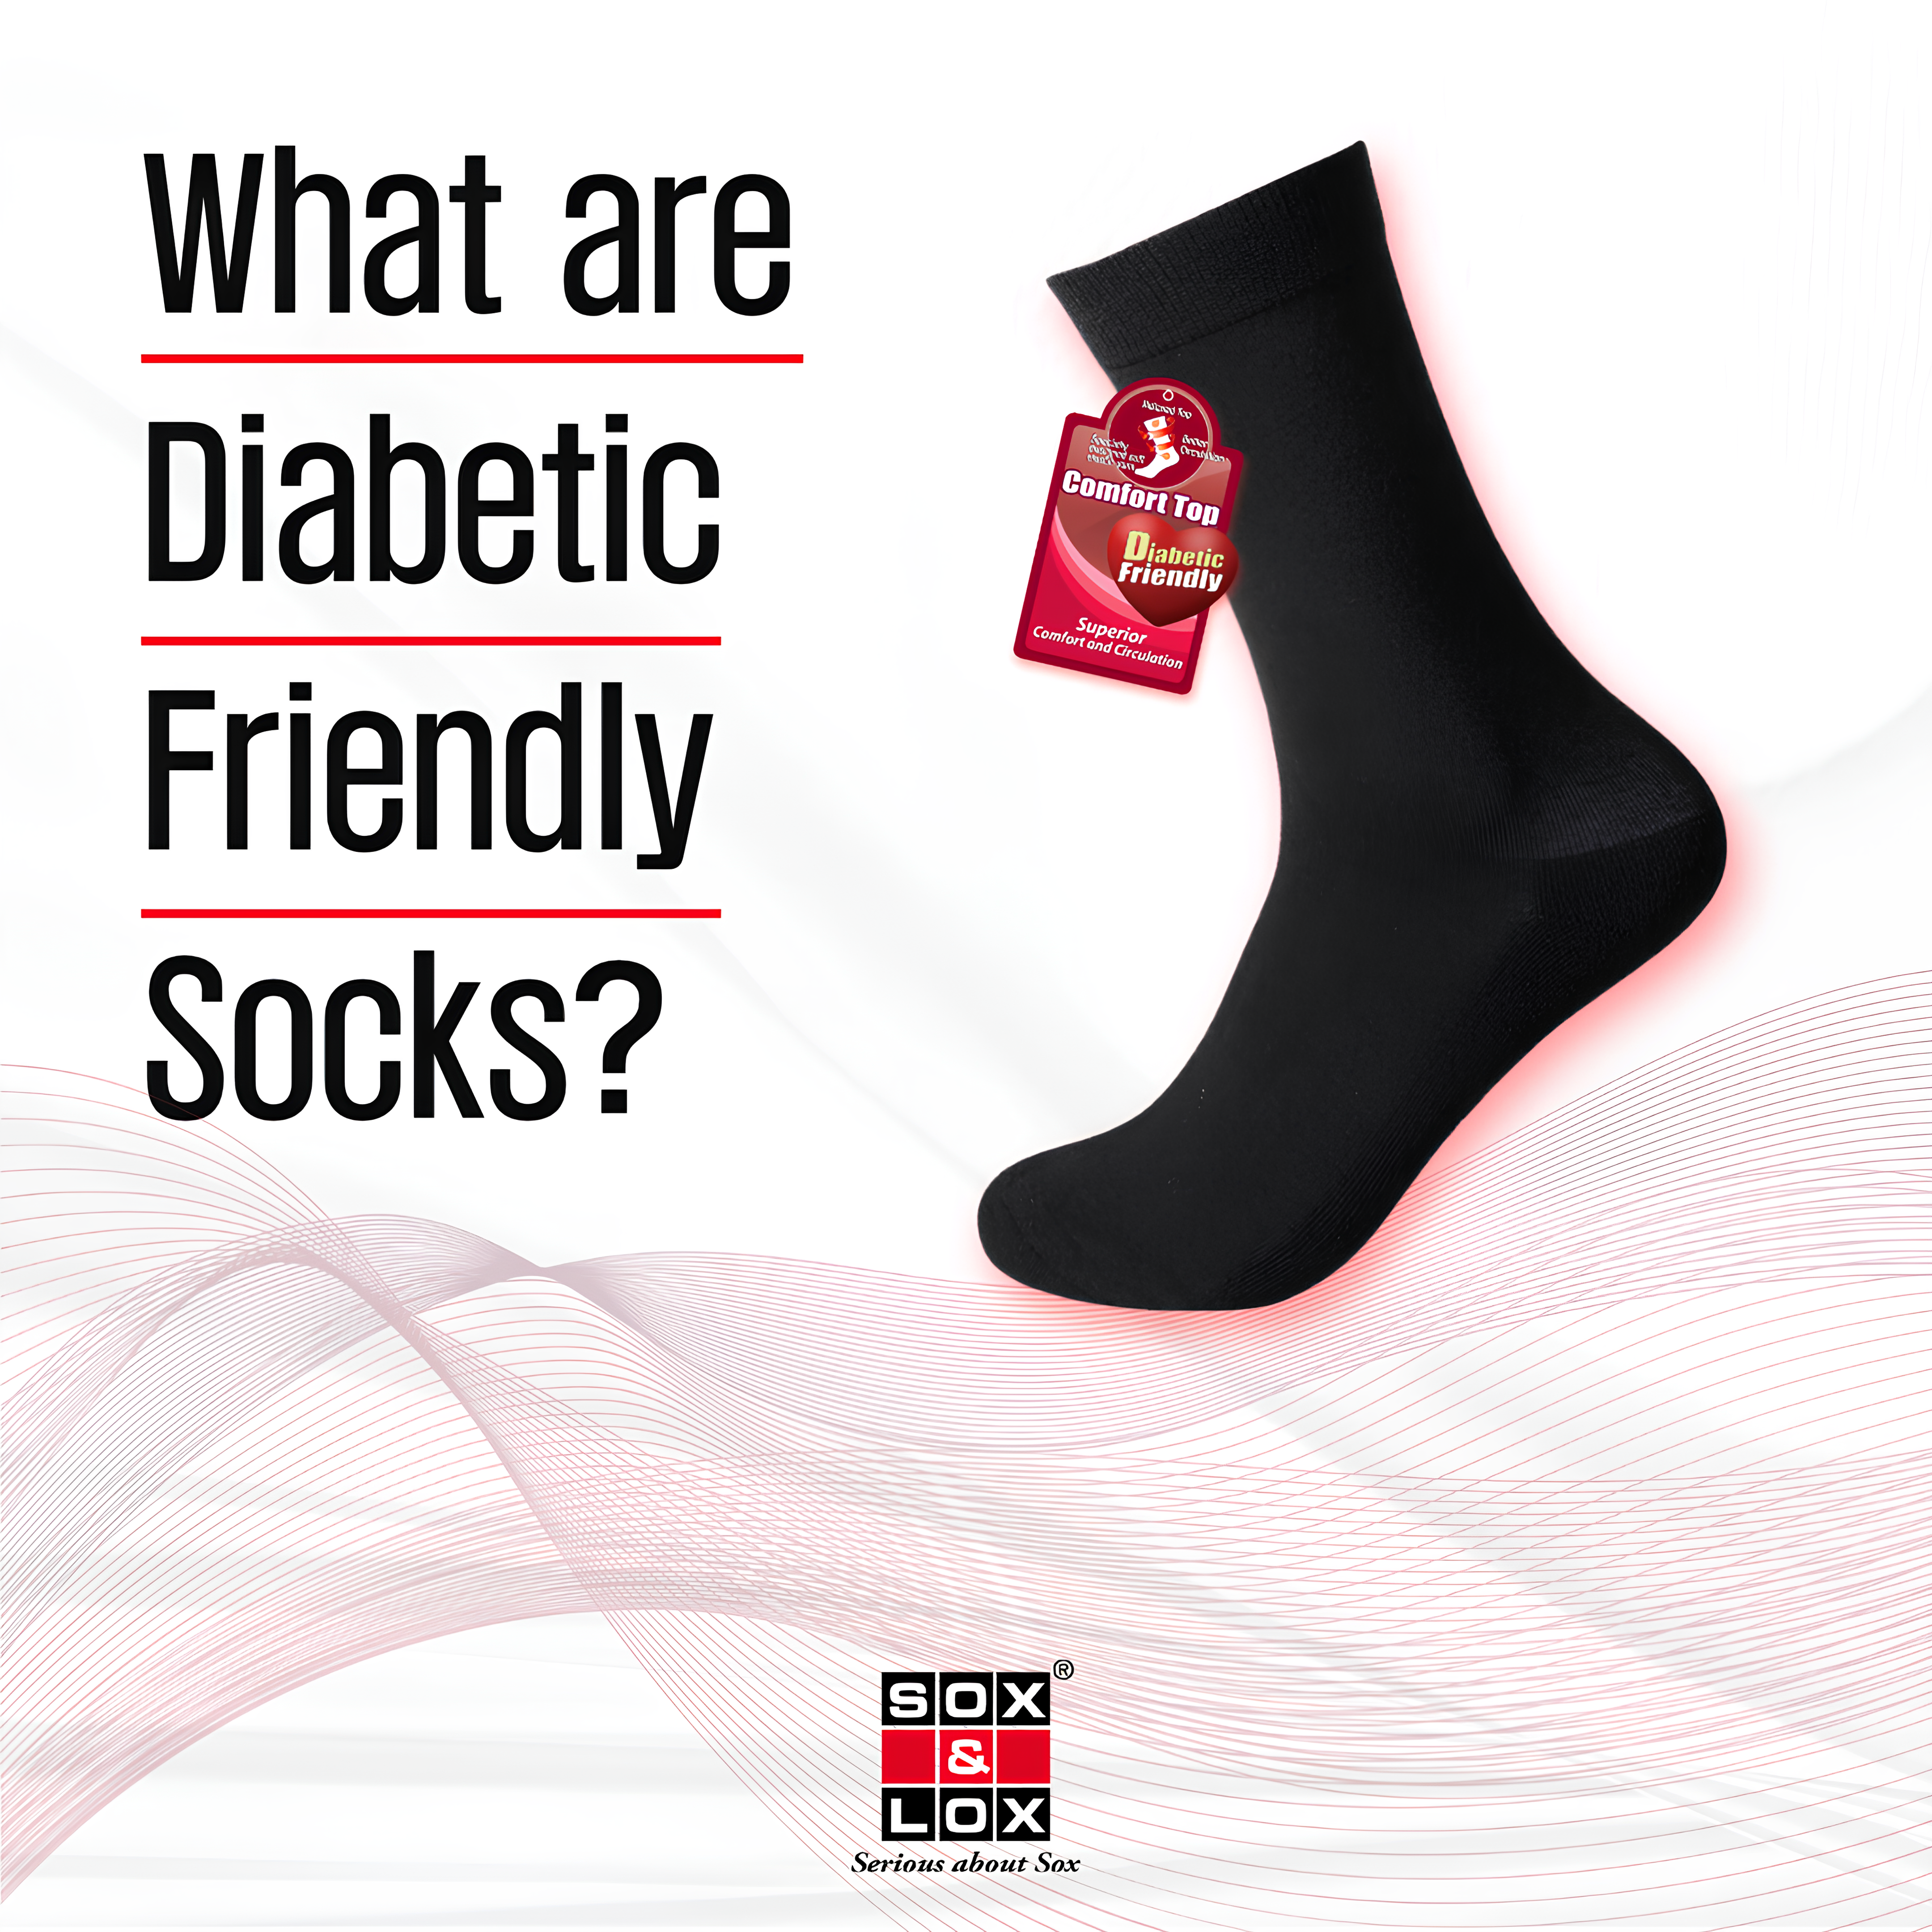 What are Diabetic Friendly Socks?